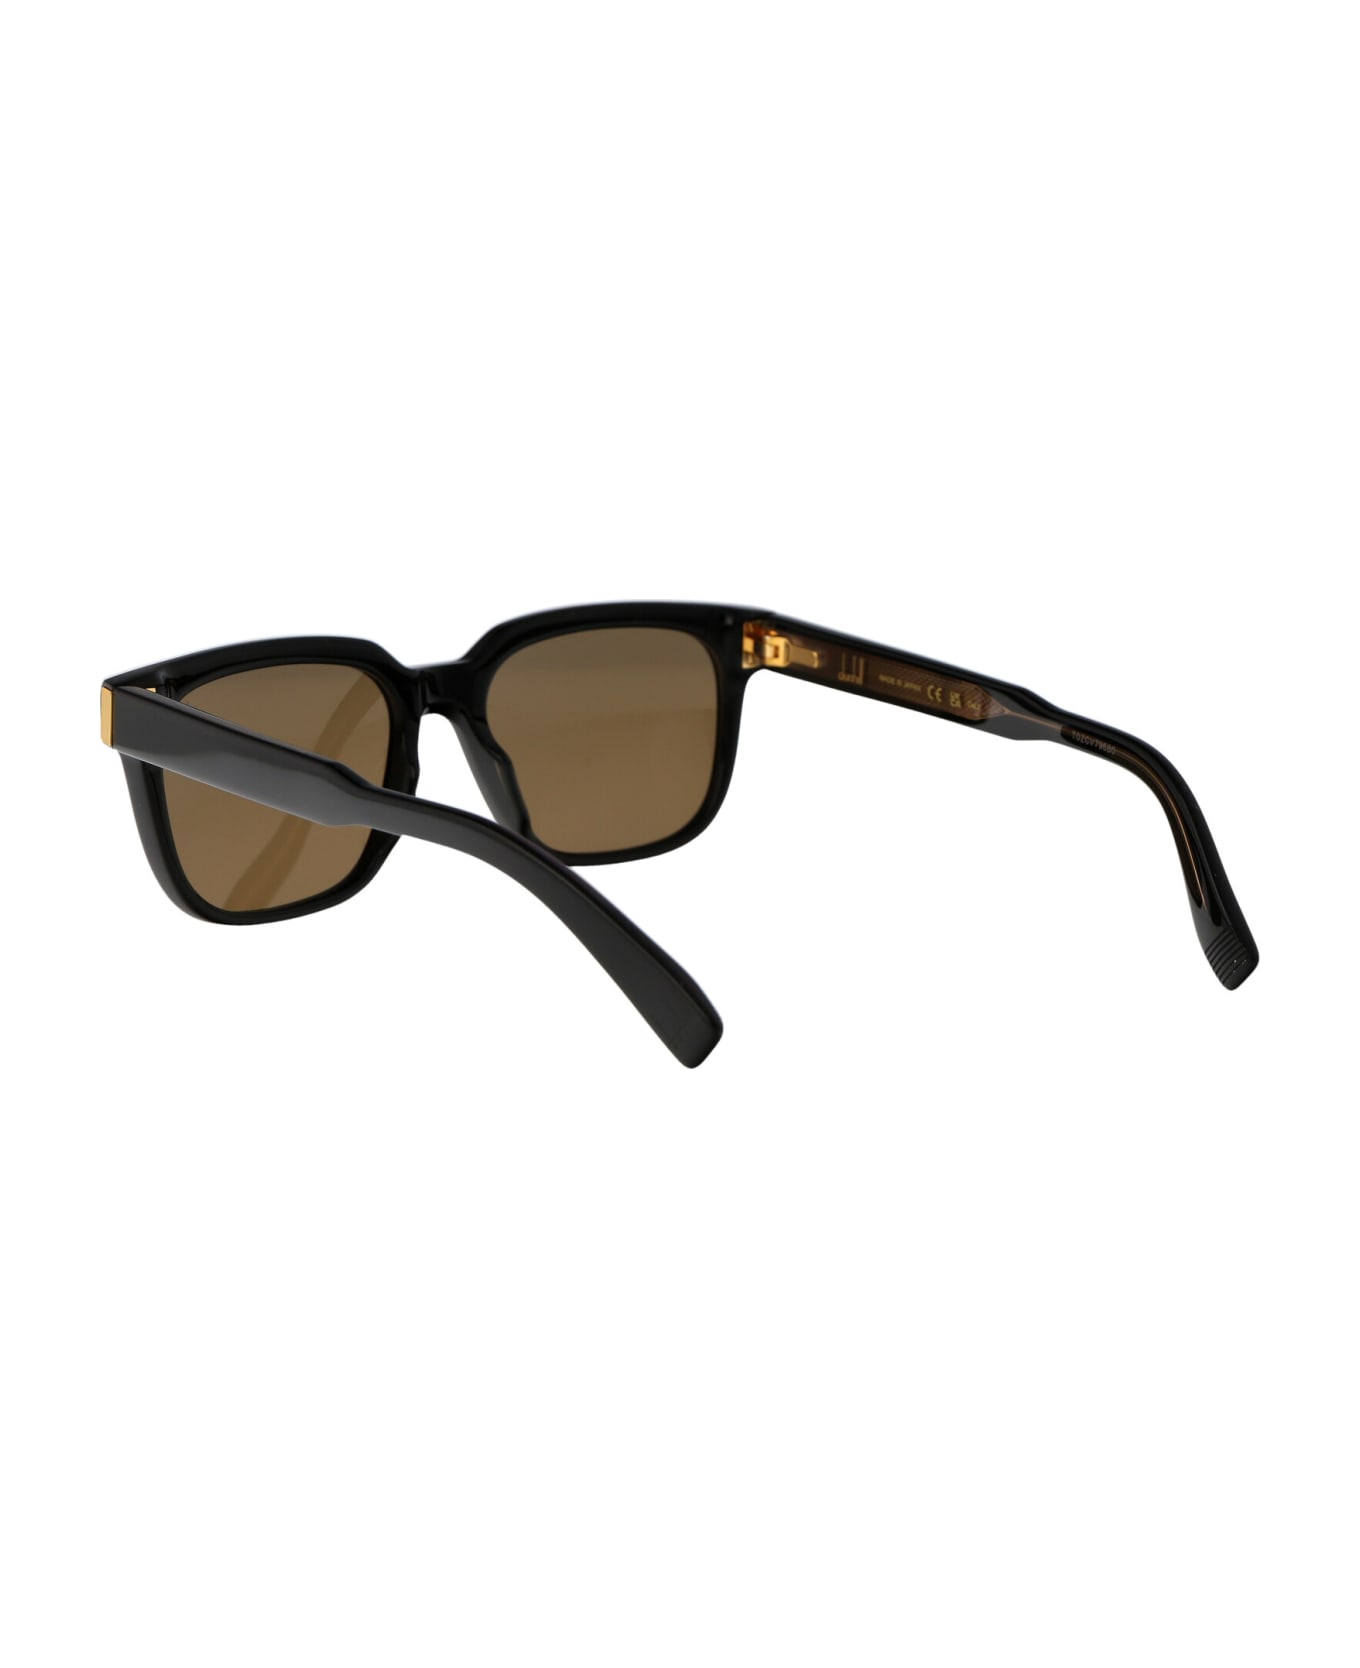 Dunhill Du0002s Sunglasses rimowa - 001 BLACK BLACK BROWN